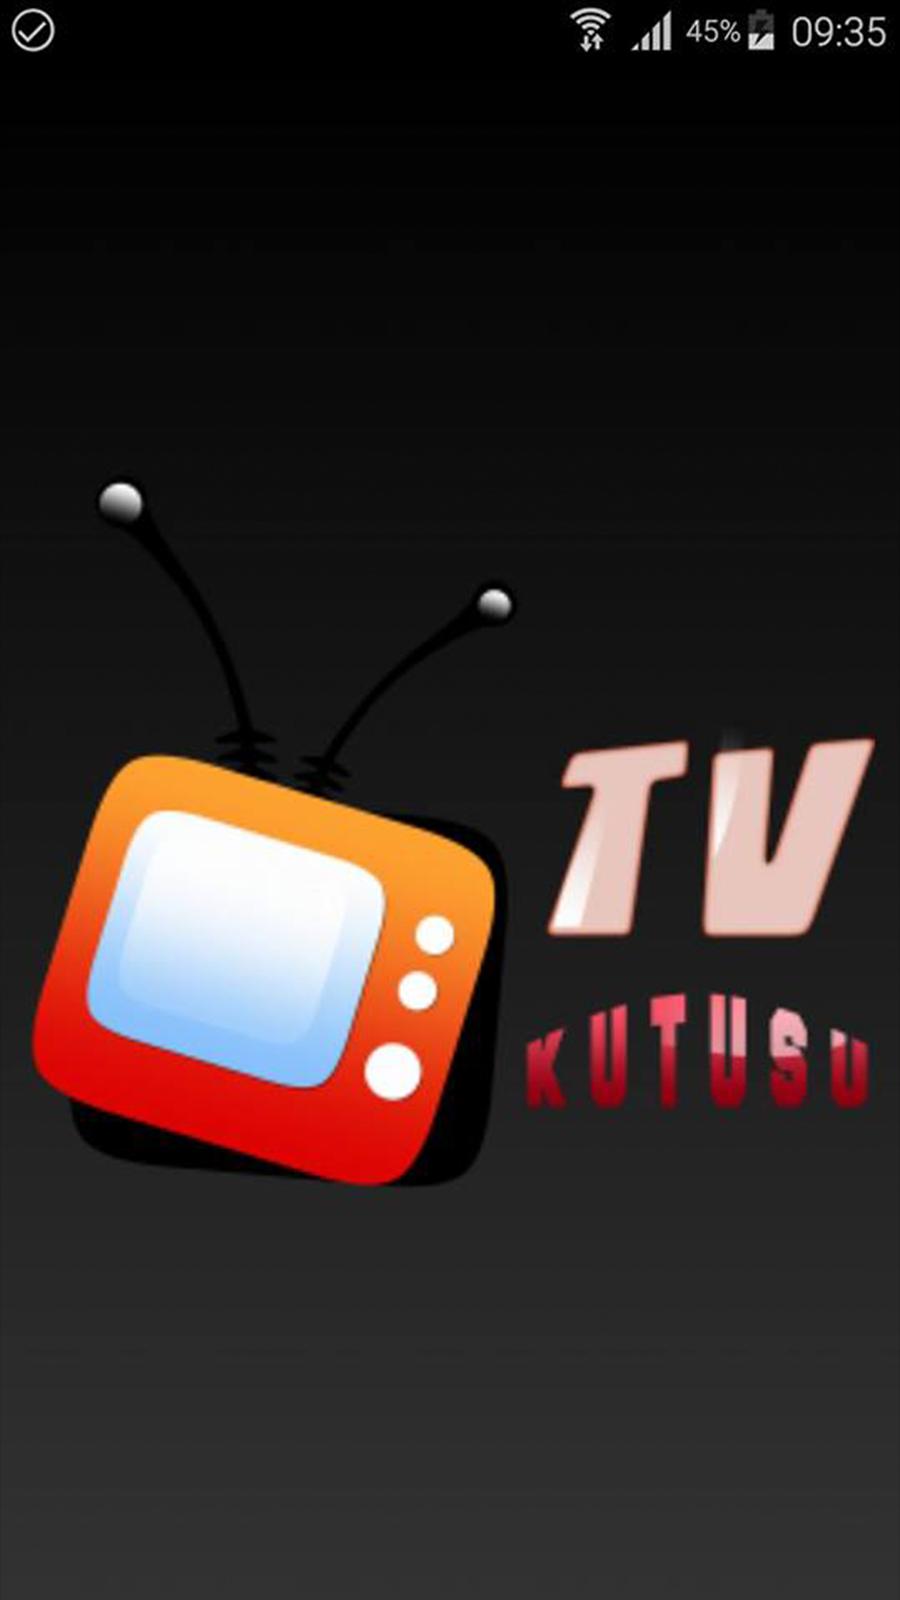 ücretsiz sinema izle - TV KUTUSU APK do pobrania na Androida